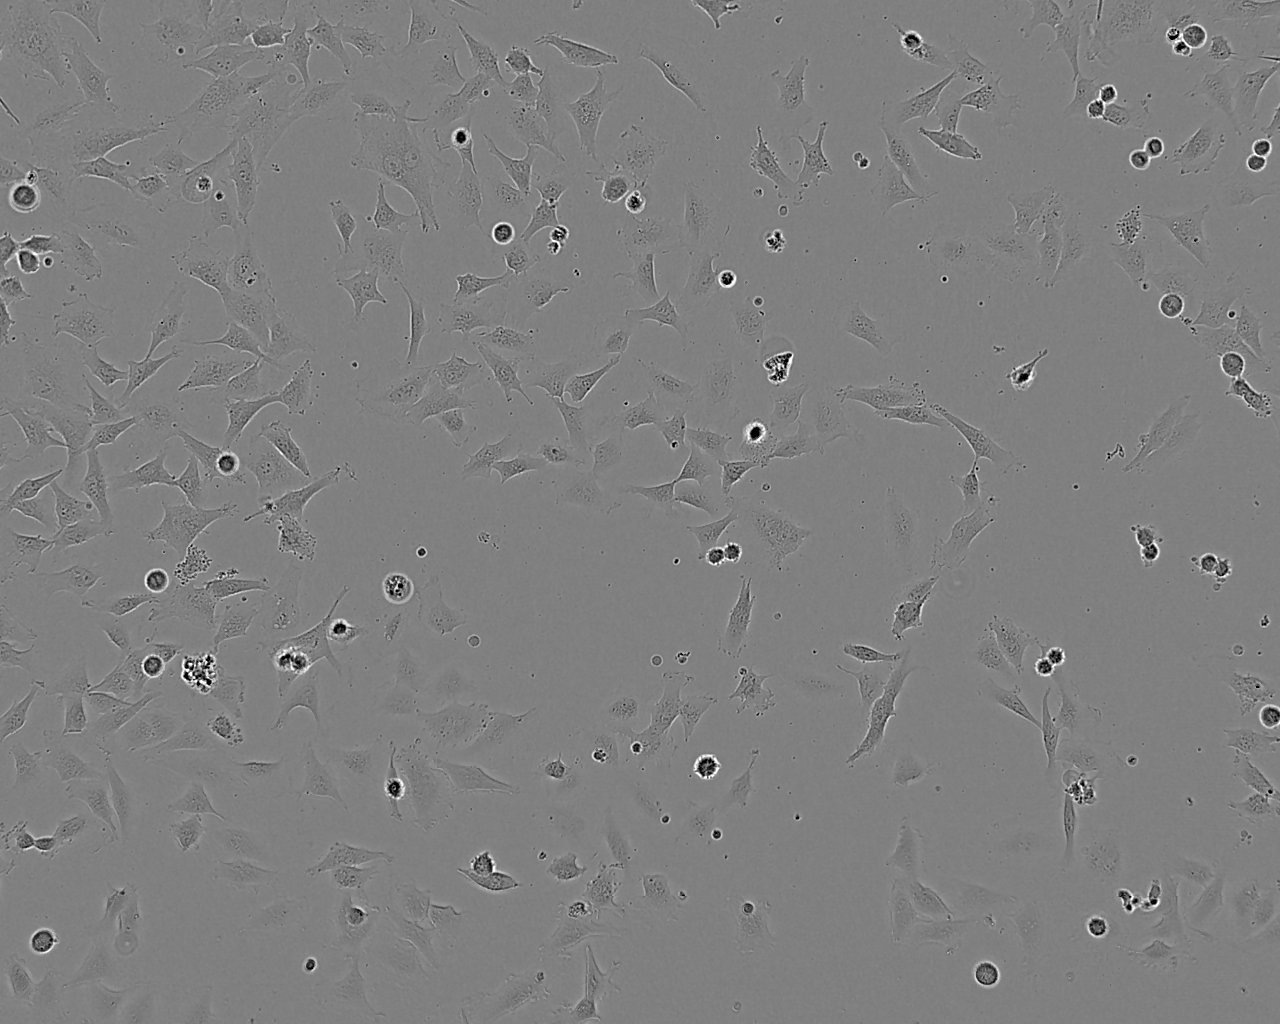 Li-7 Cell:人肝癌细胞系,Li-7 Cell